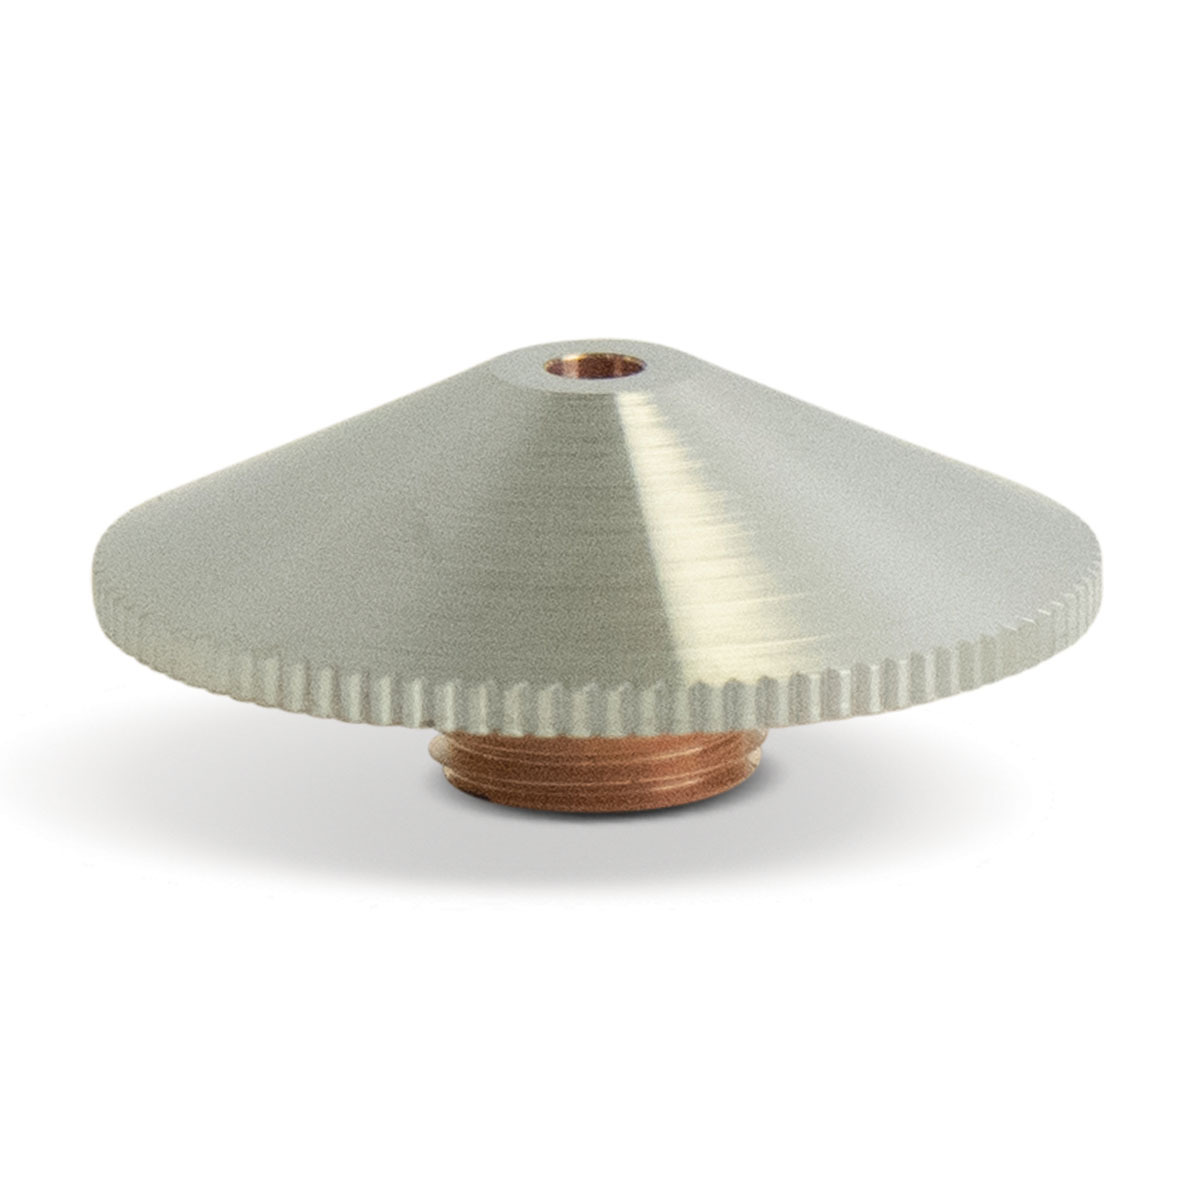 RADNOR™ 2.3 mm Copper Nozzle For Trumpf® CO2 Laser To RAD64008096 for sale online at autumn supply